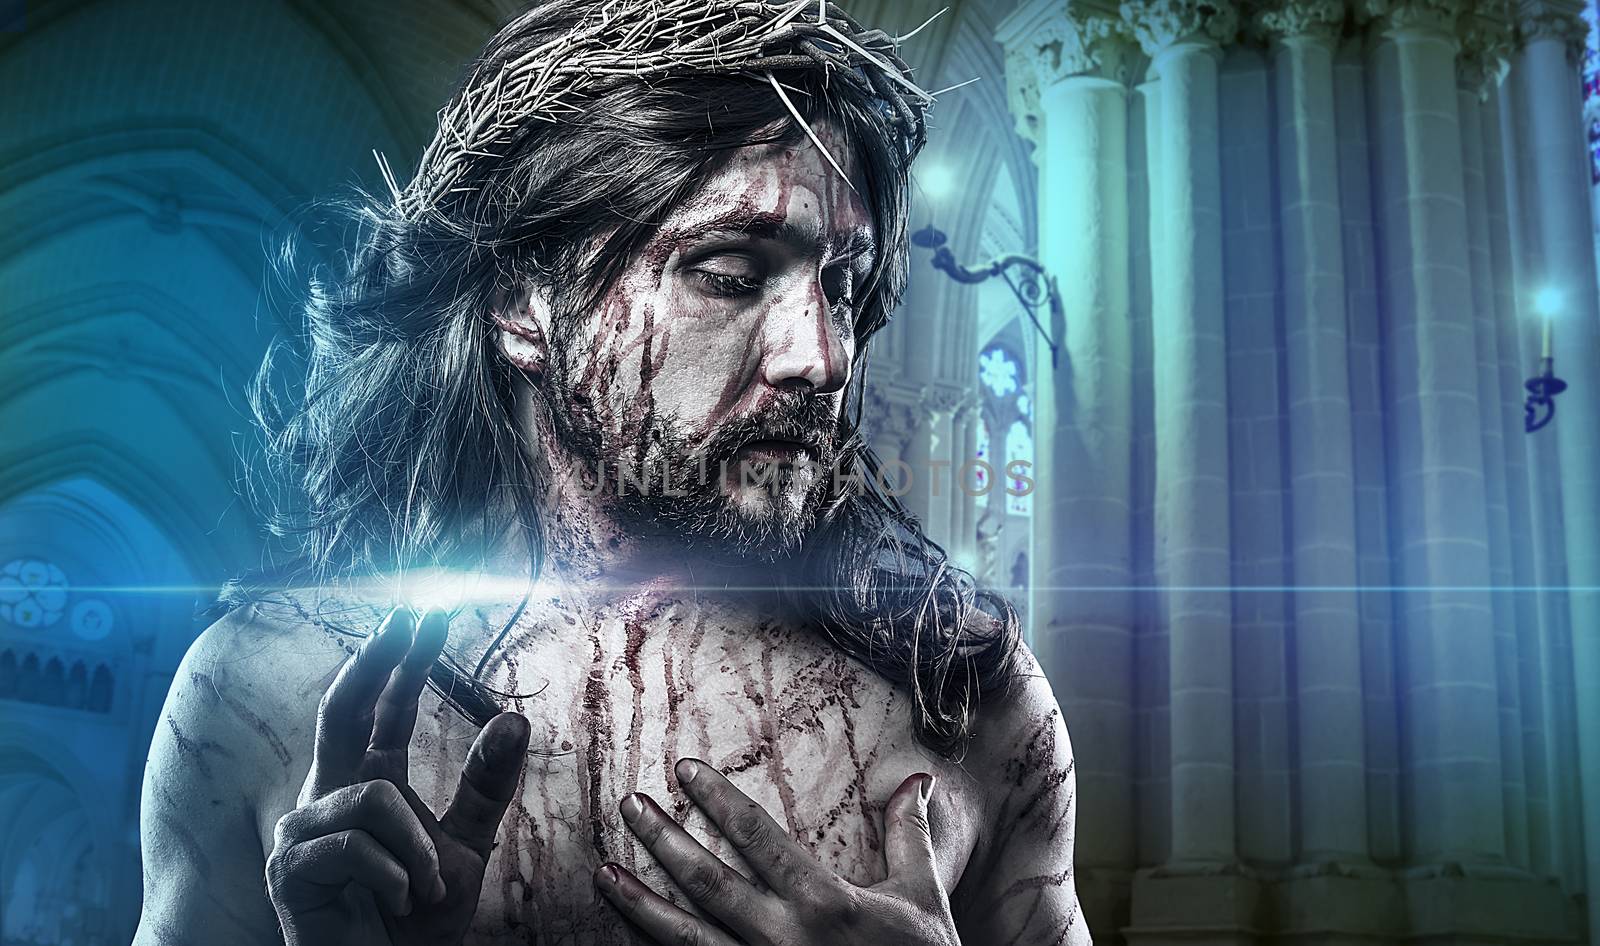 Jesus Christ calvary, man bleeding, representation of passion wi by FernandoCortes